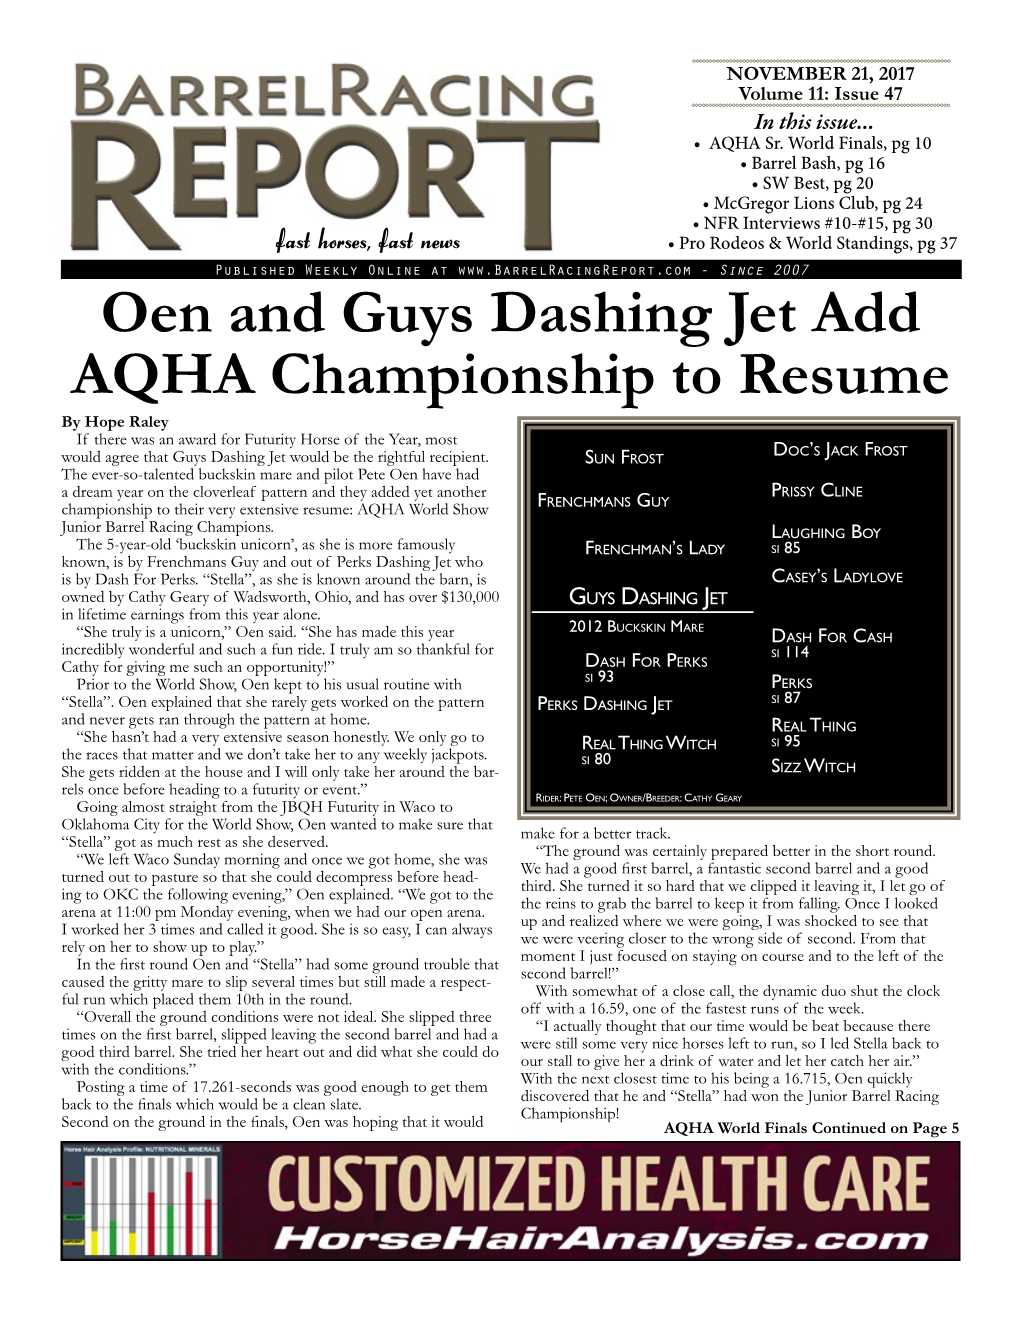 Oen and Guys Dashing Jet Add AQHA Championship to Resume